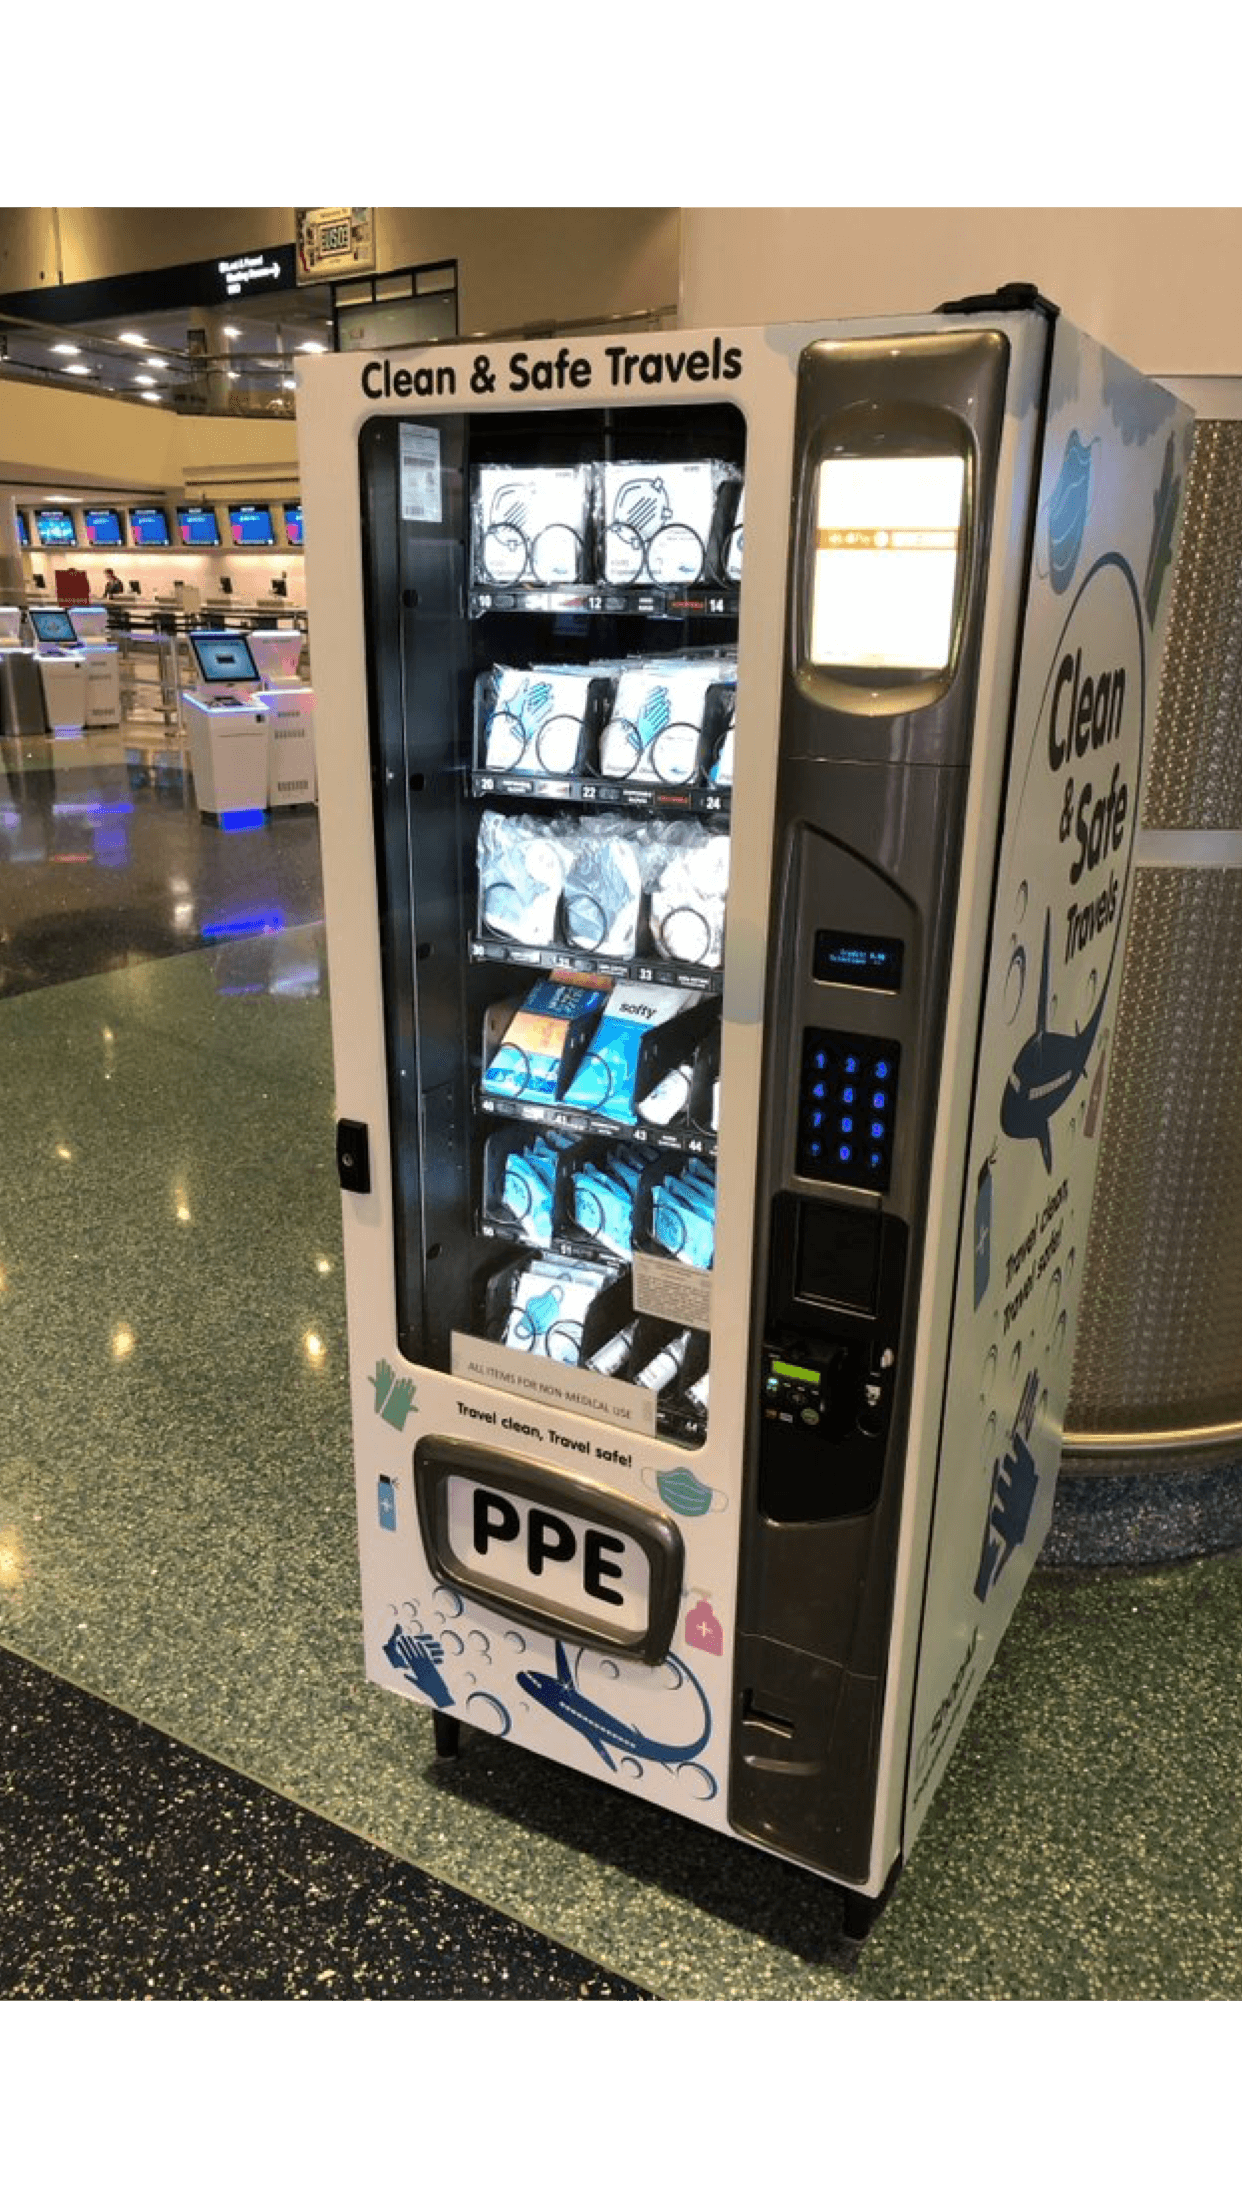 Las Vegas’ McCarran Airport installs PPE vending machines